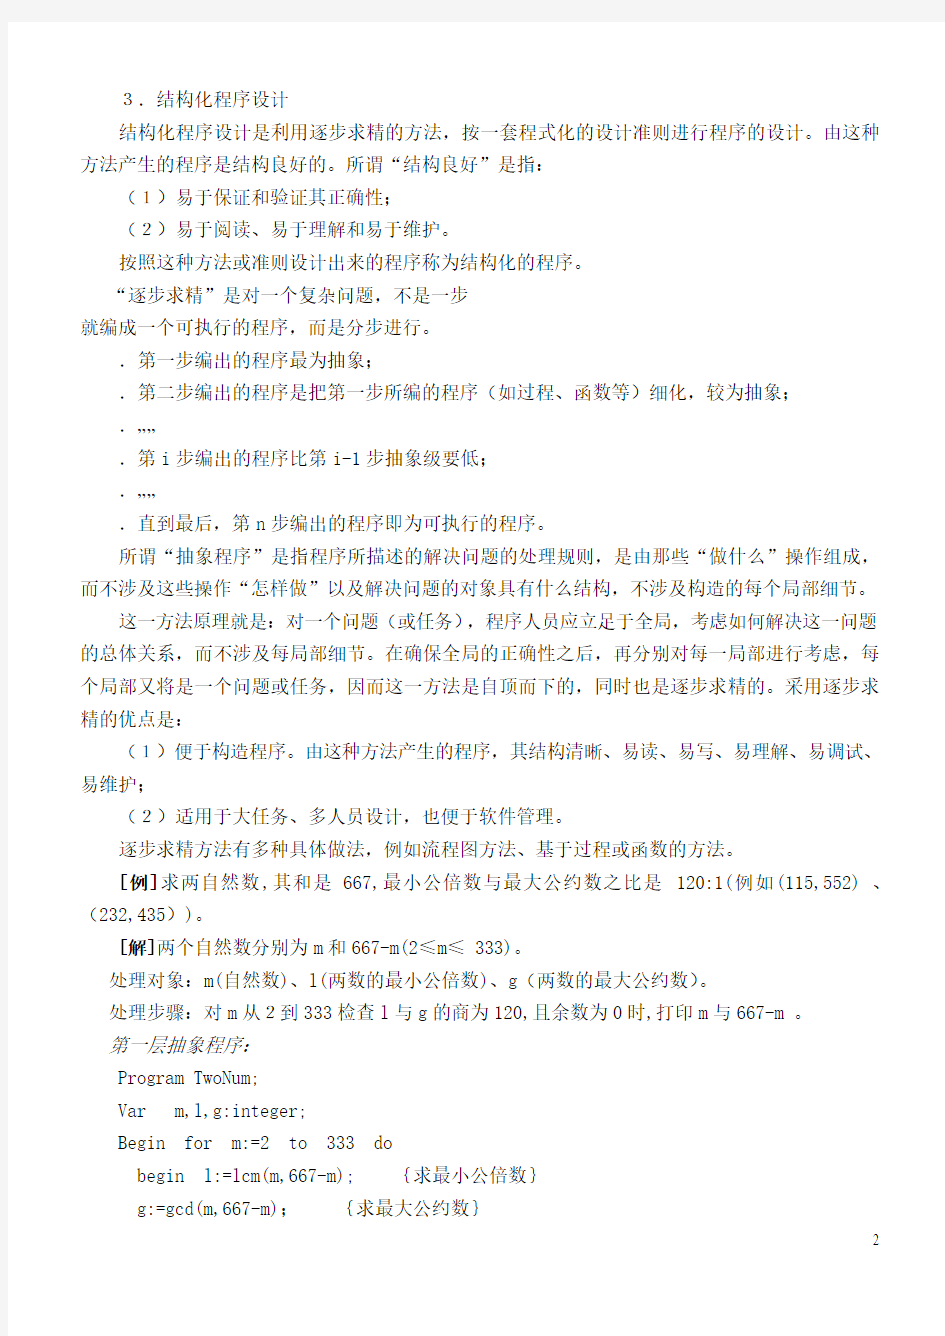 2014NOIP(pascal)典型算法设计题集(中国计算机学会出版)